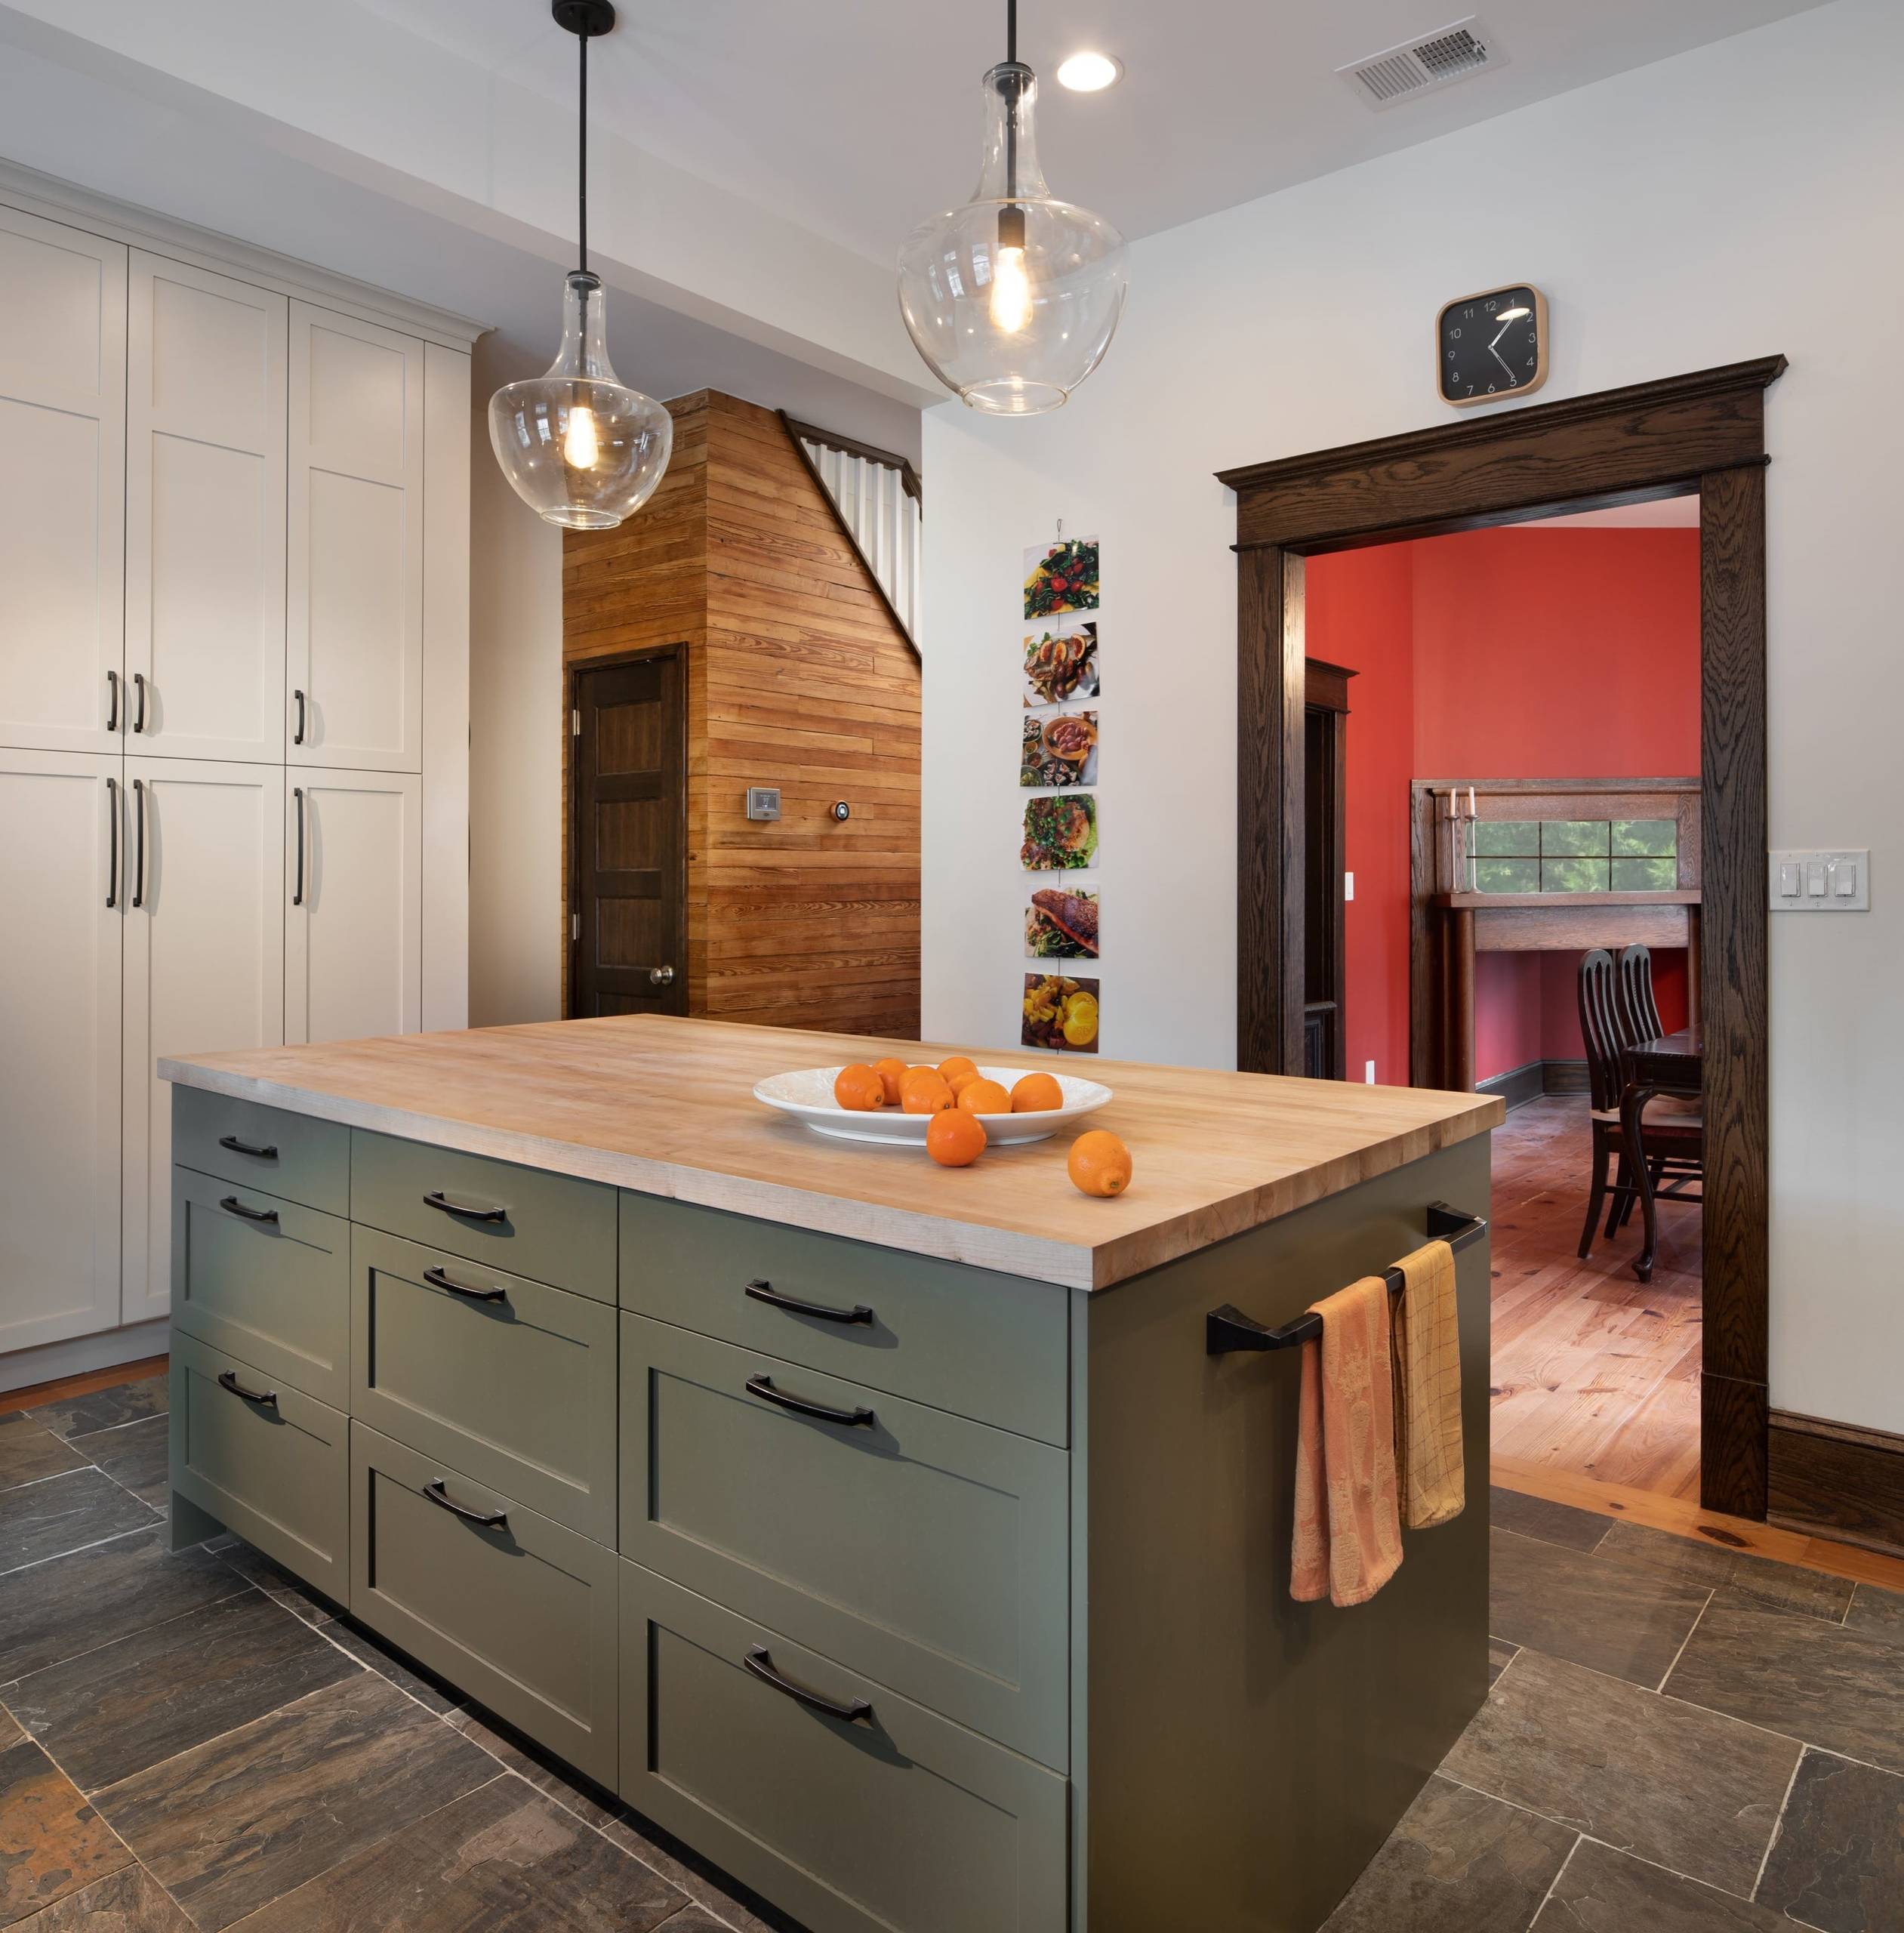 10 Carbon slate kitchen renovation ideas